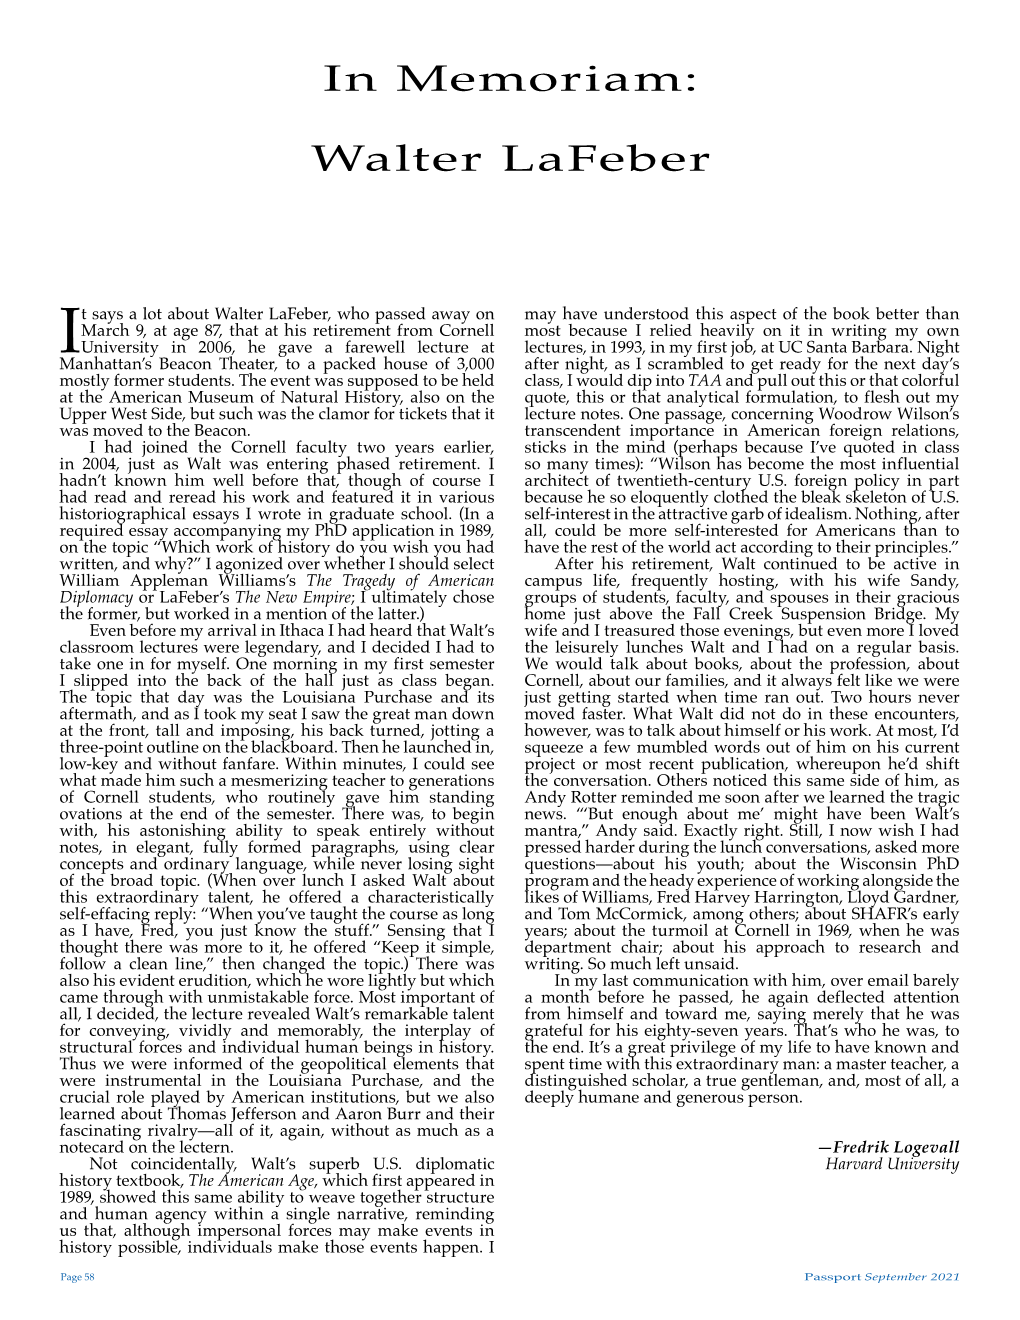 In Memoriam: Walter Lafeber